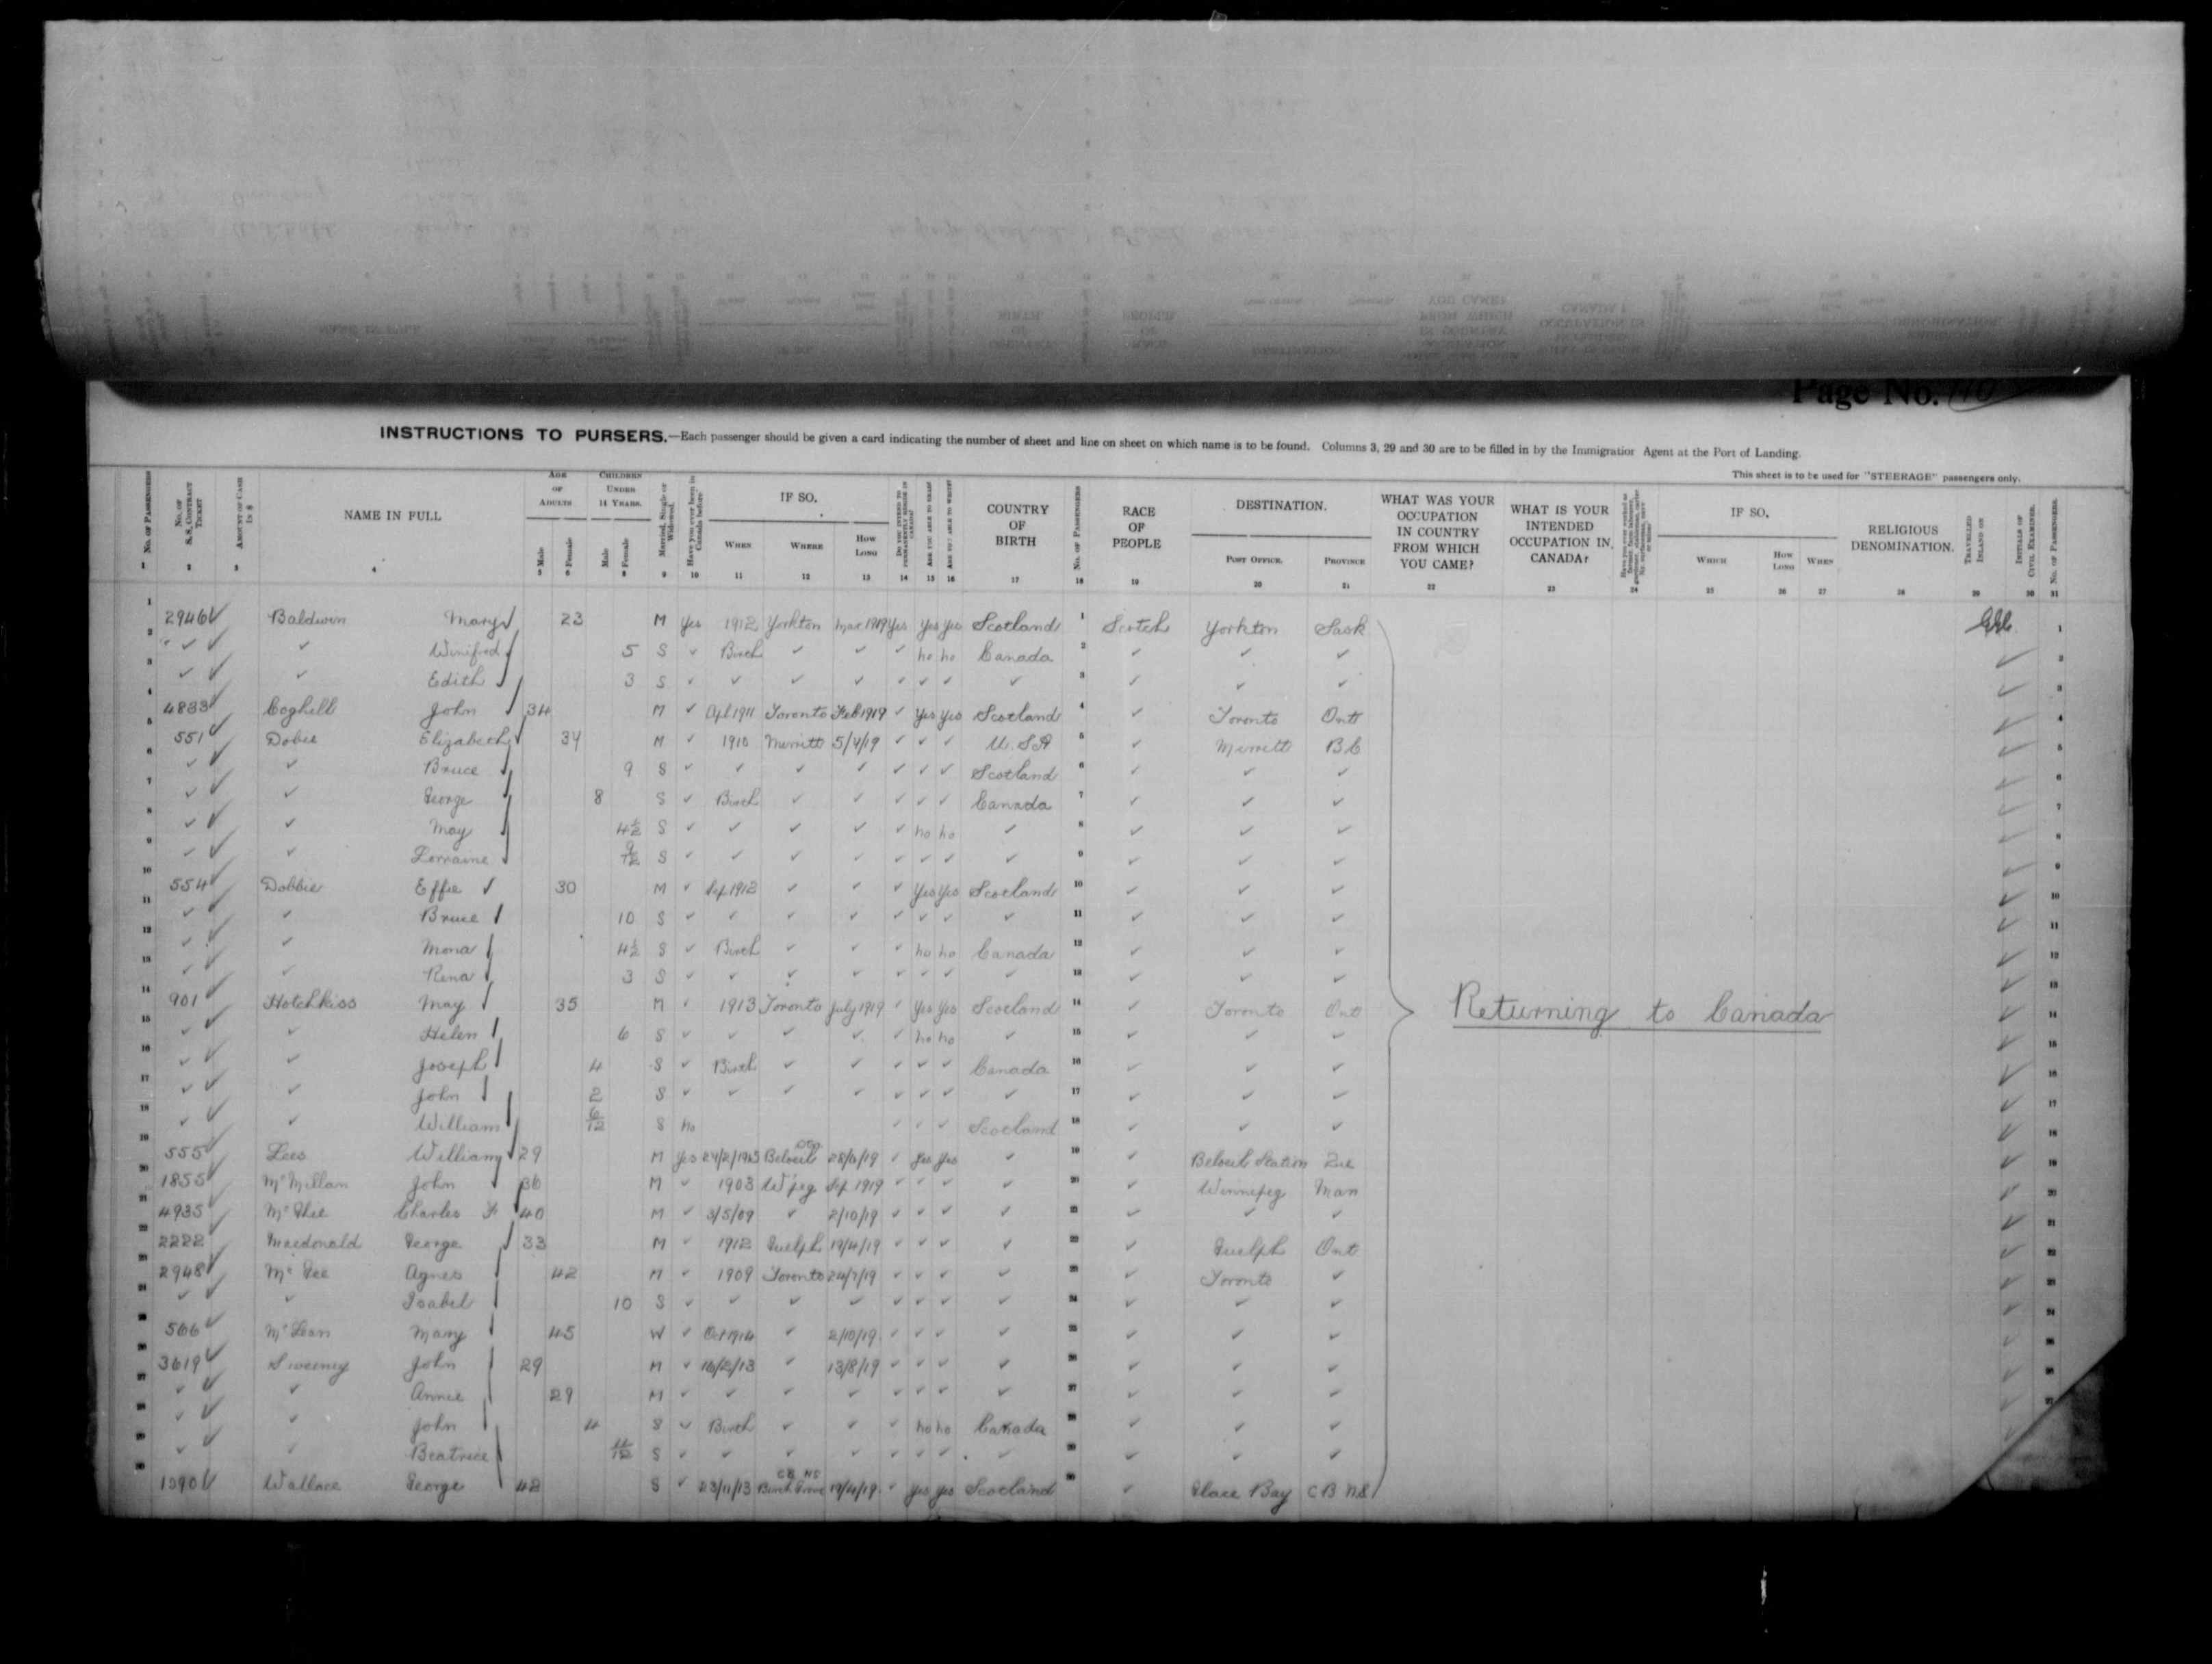 Canadian Passenger Lists, 1865-1935